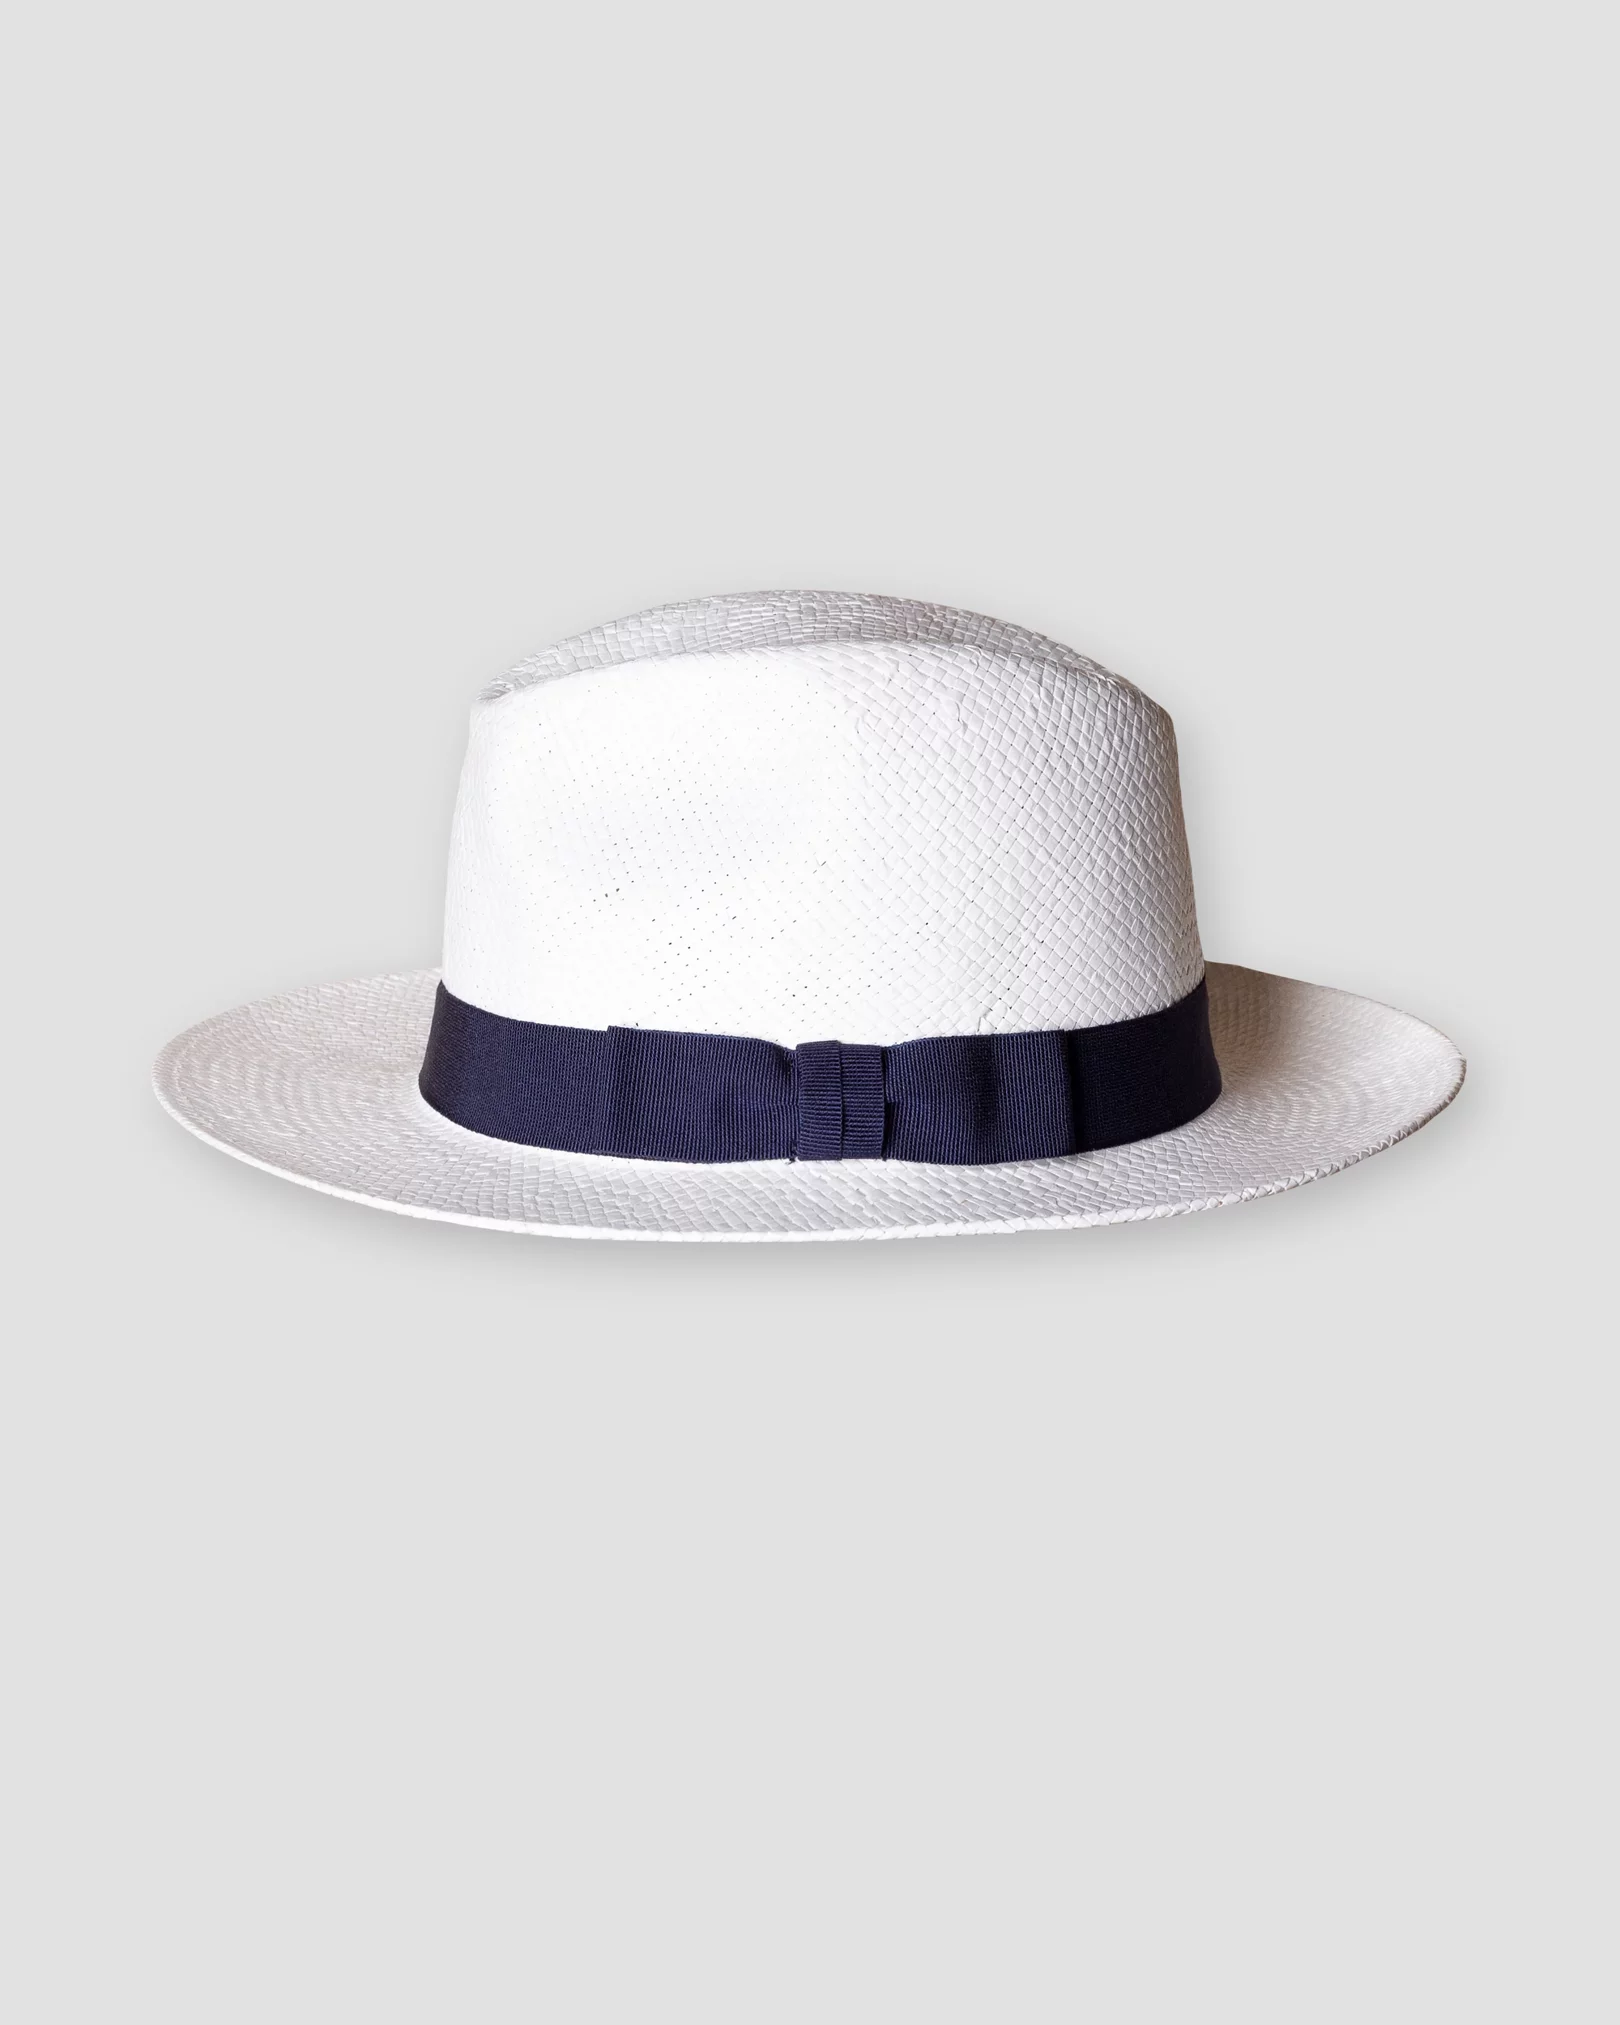 Eton - White Paper Straw Hat - Navy Grosgrain Band